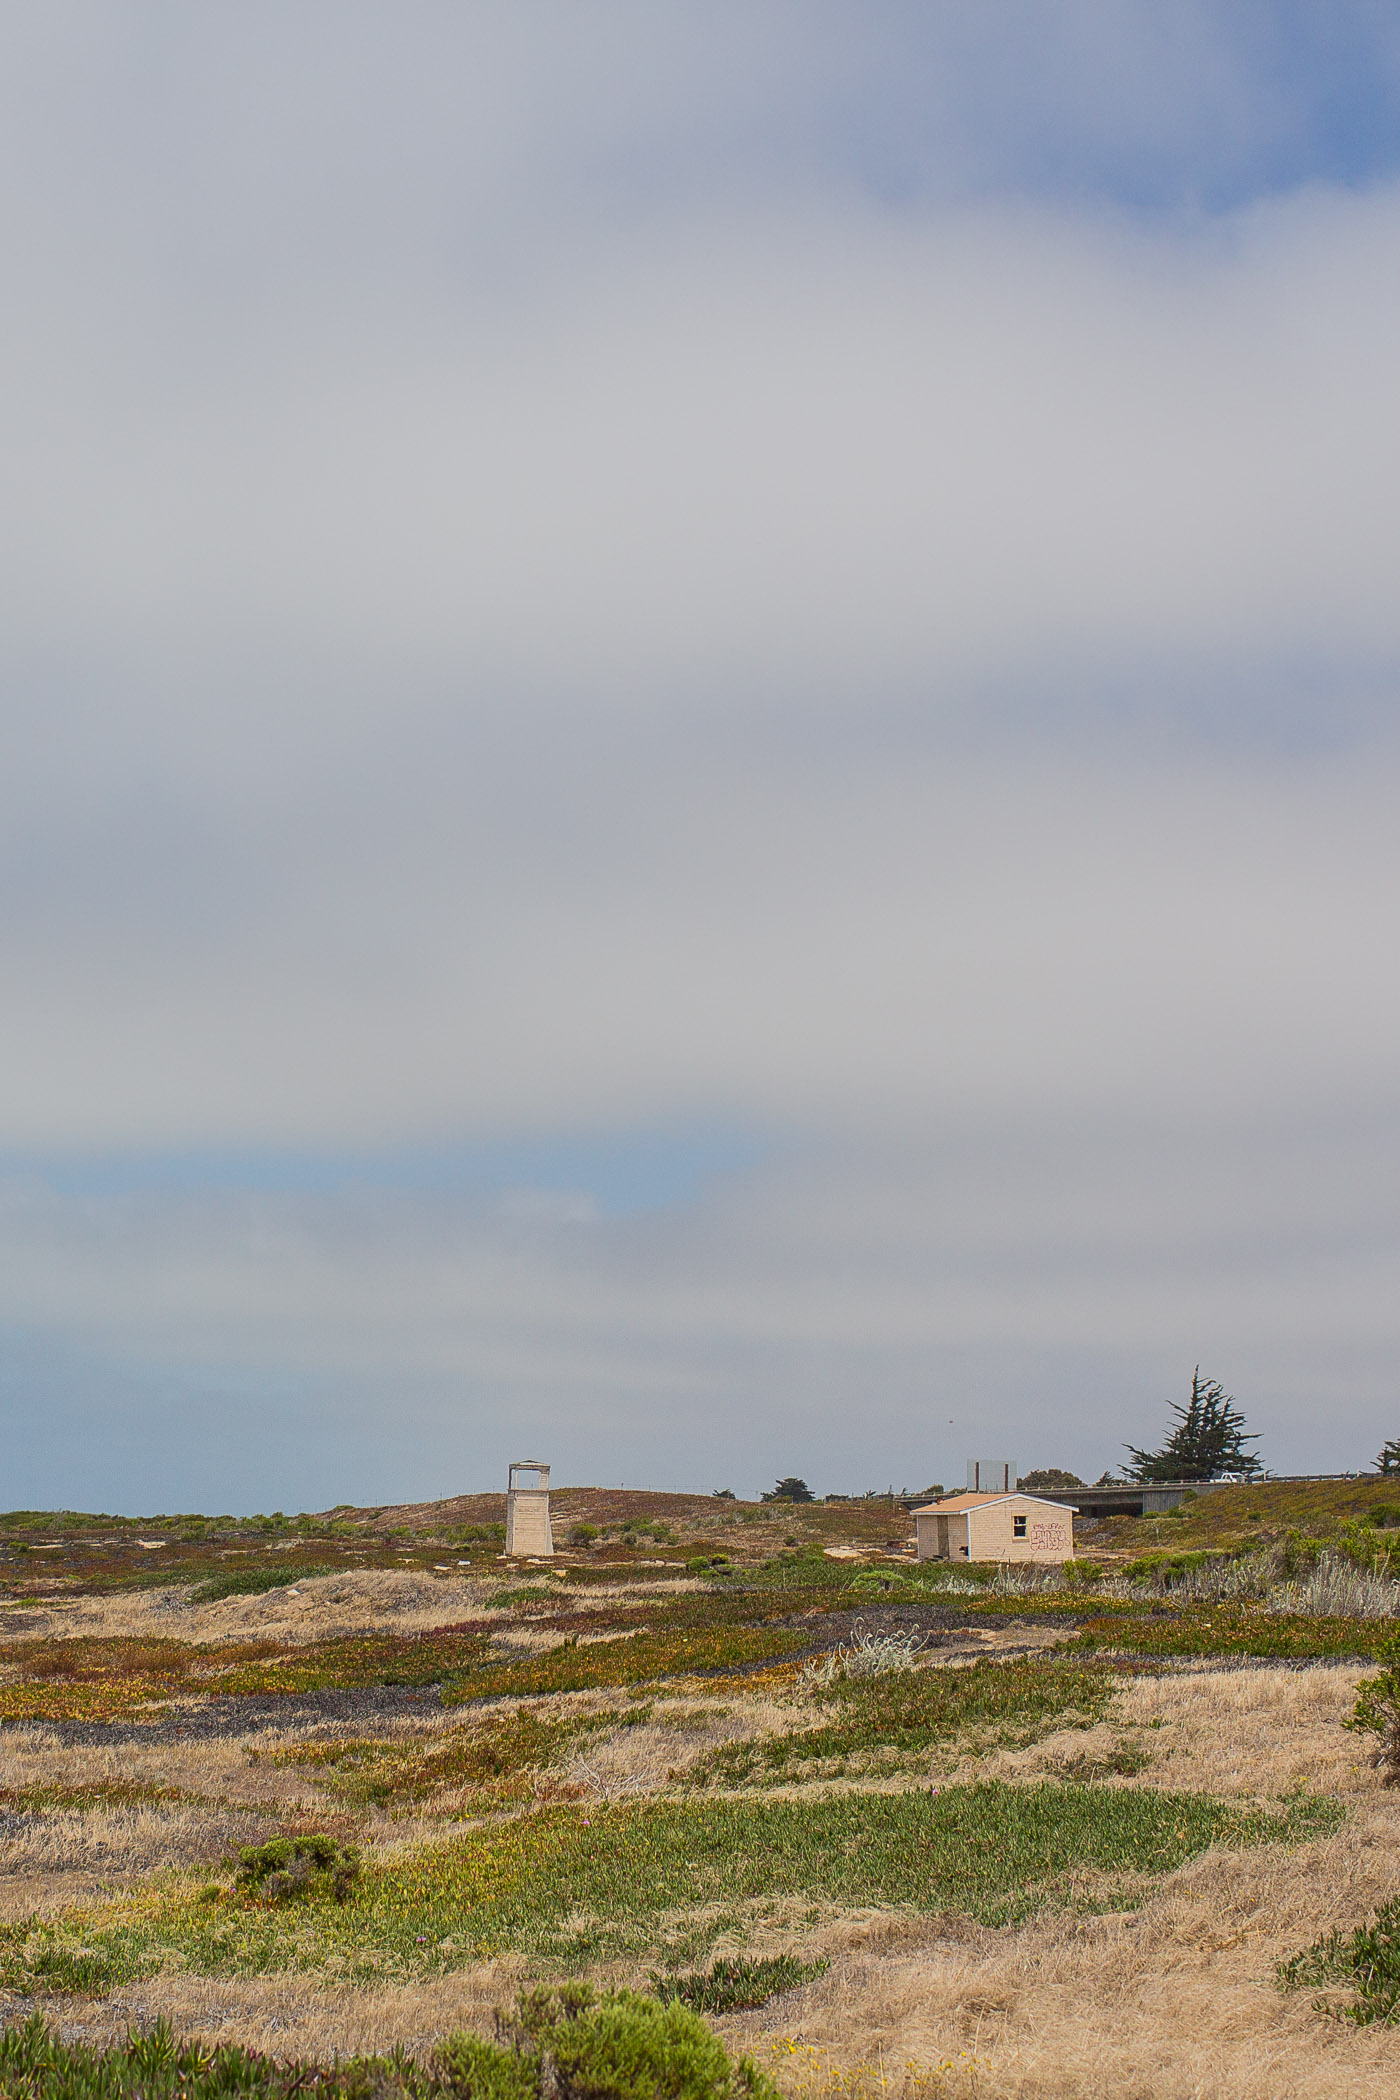 Fort Ord Dunes near Monterey, California